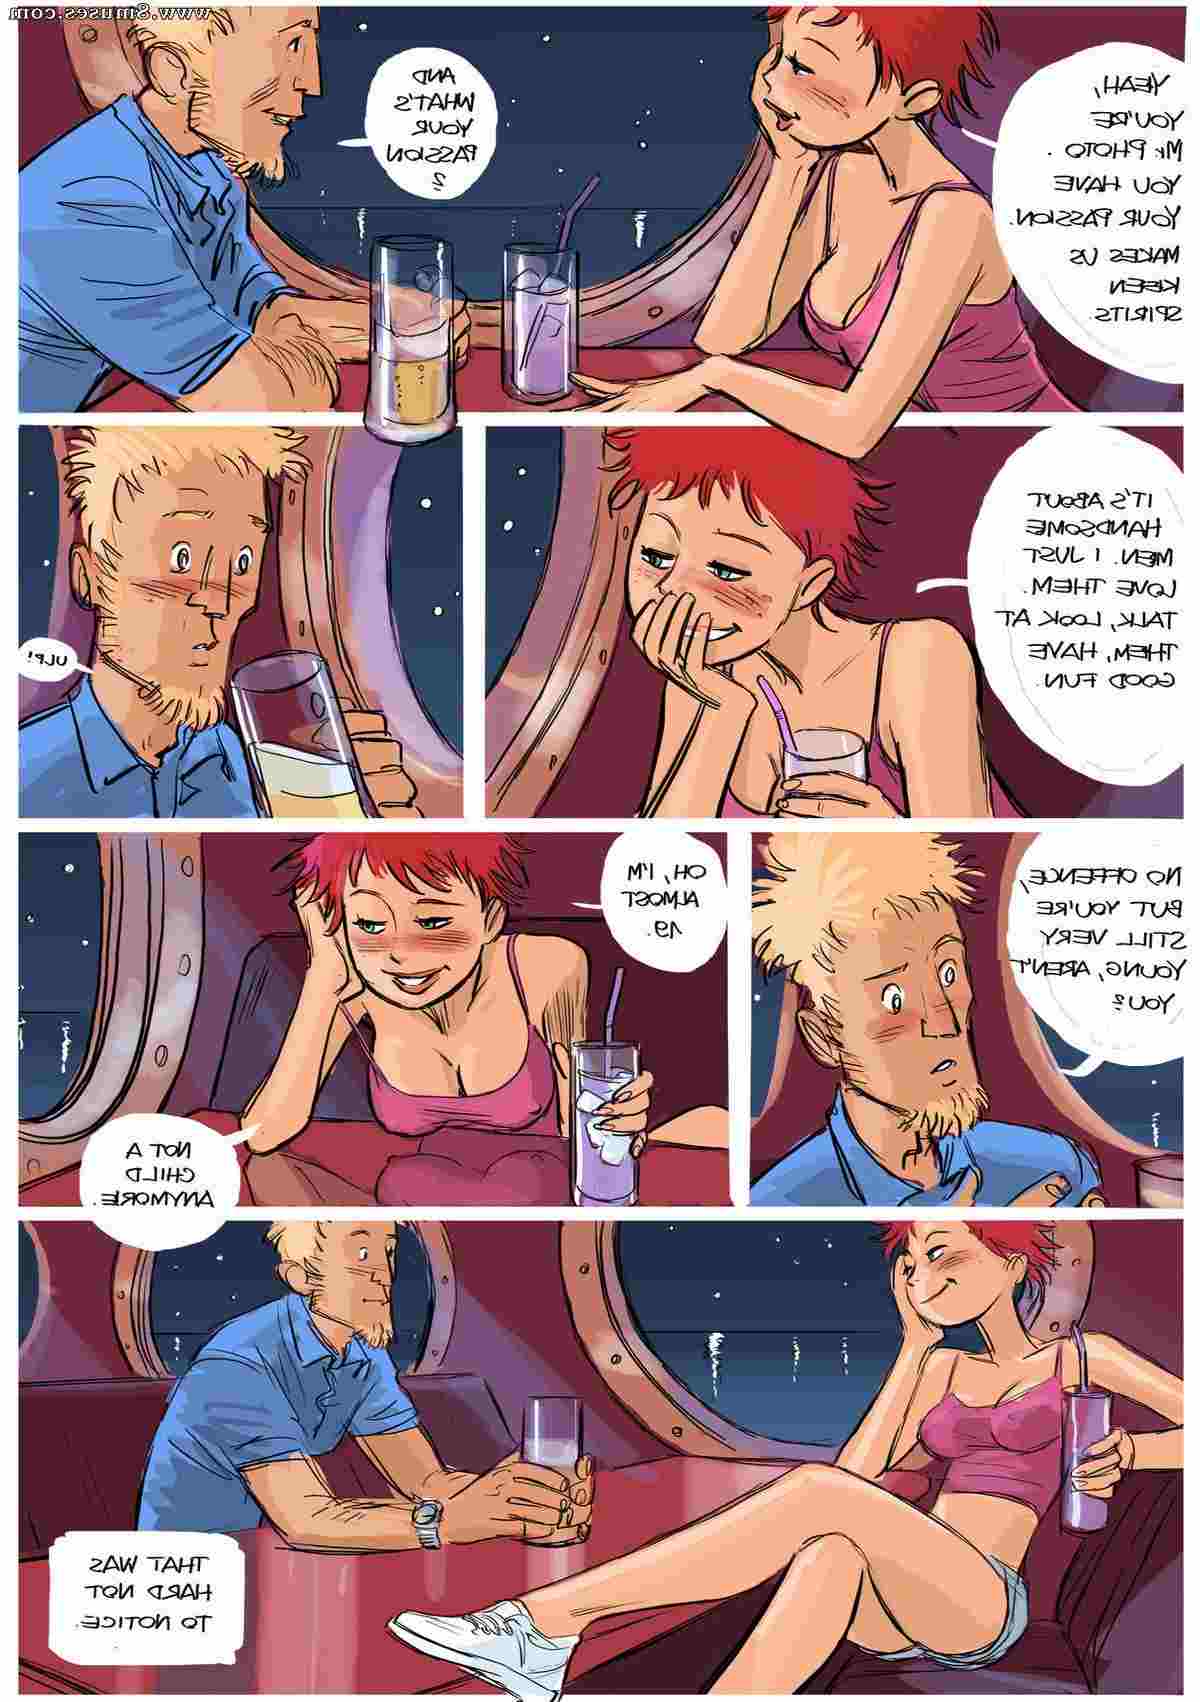 Slipshine-Comics/Lust-Boat Lust_Boat__8muses_-_Sex_and_Porn_Comics_14.jpg